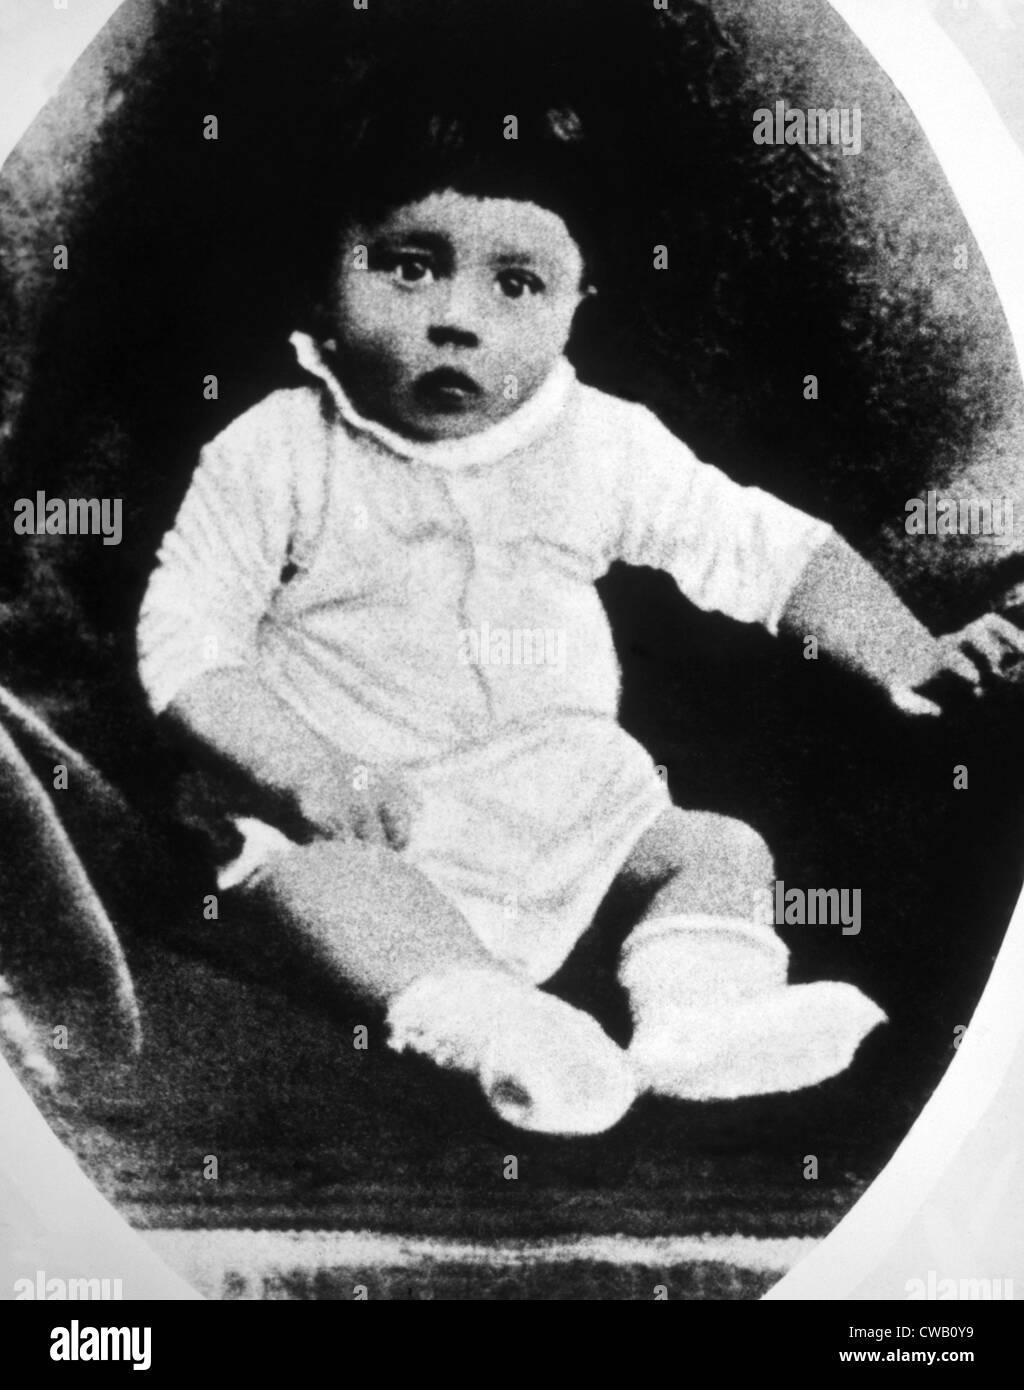 Adolf Hitler as a baby, photo taken by J.F. Klinger of Brauna, Austria, 1890 Stock Photo